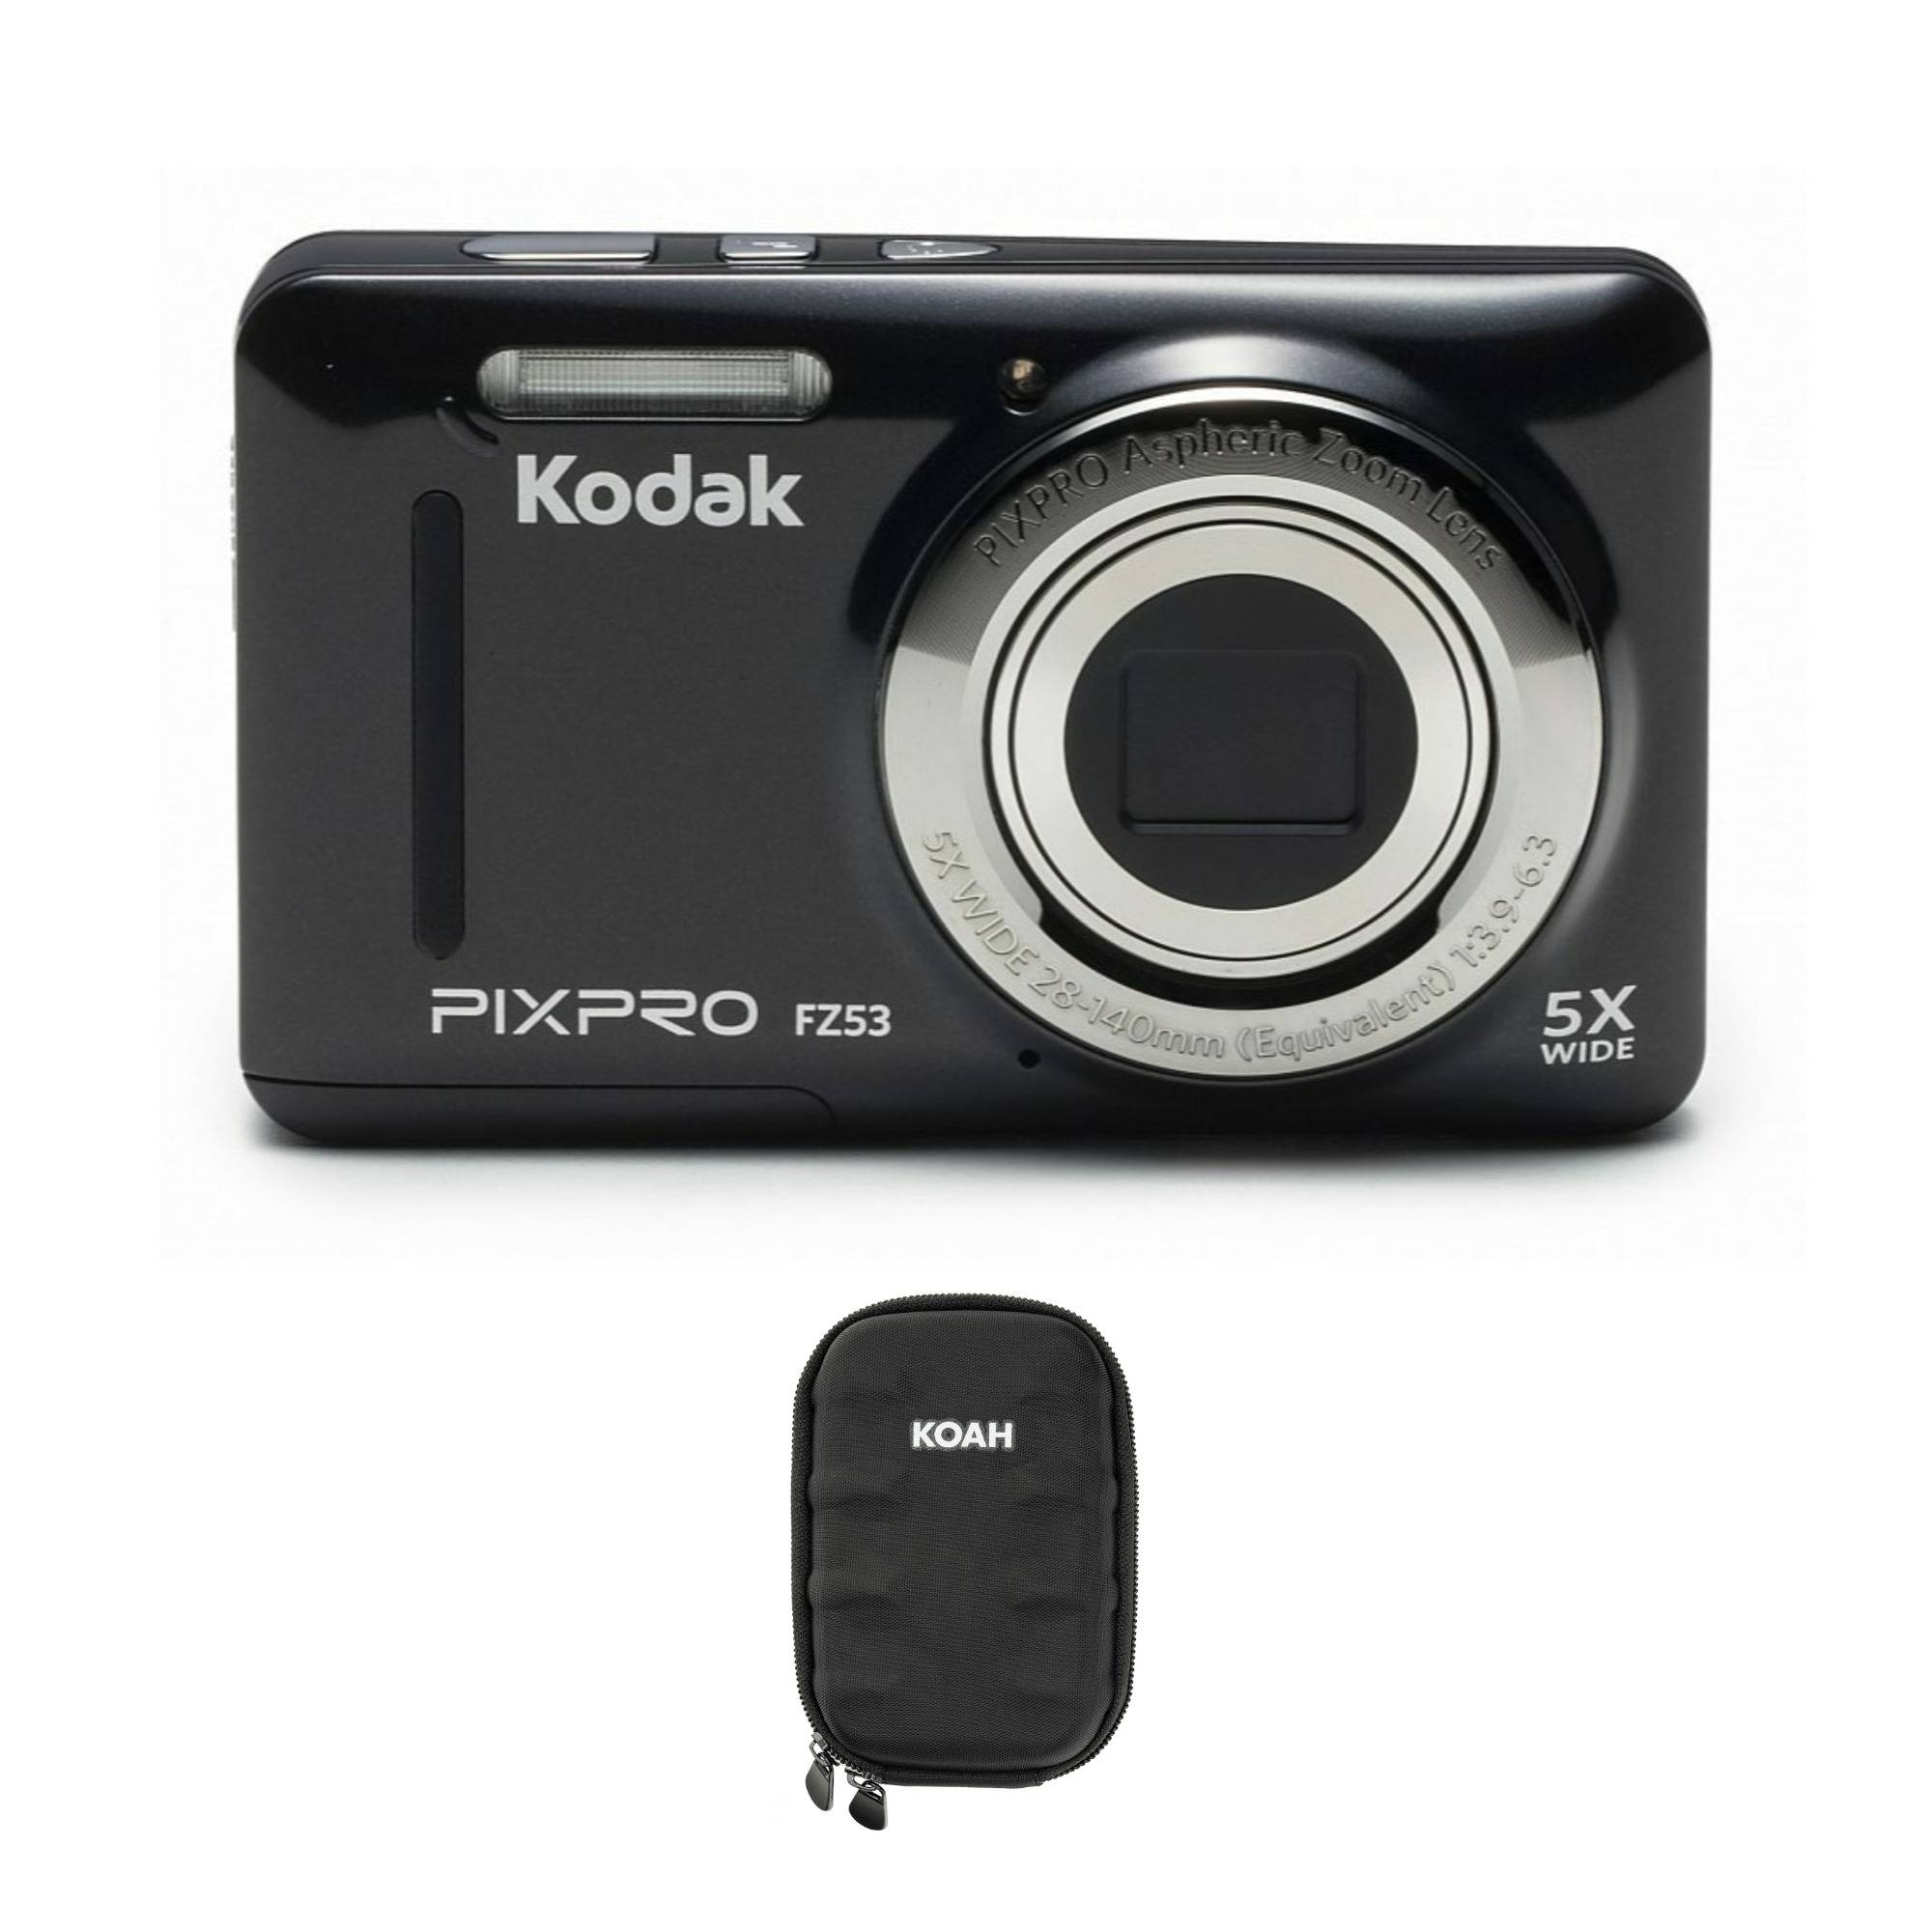 Kodak PIXPRO Friendly Zoom FZ53 Digital Camera (Black) with Portable Camera Case